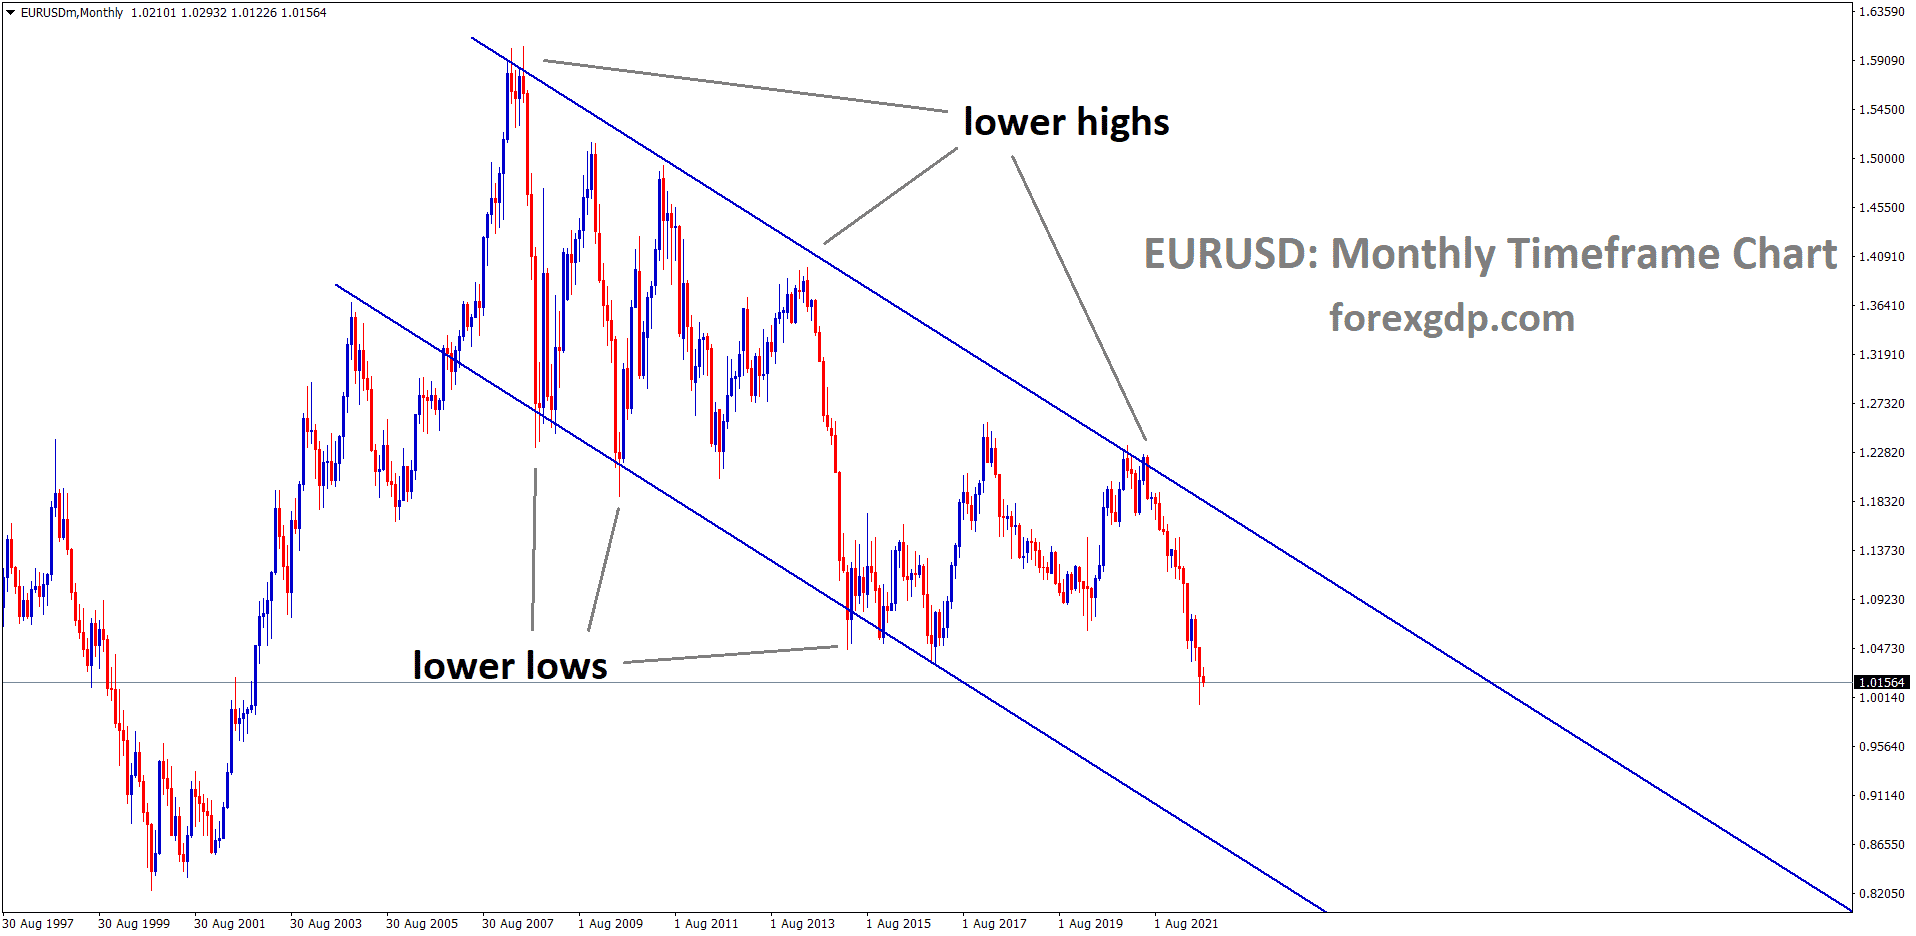 EURUSD currency pair down trend analysis